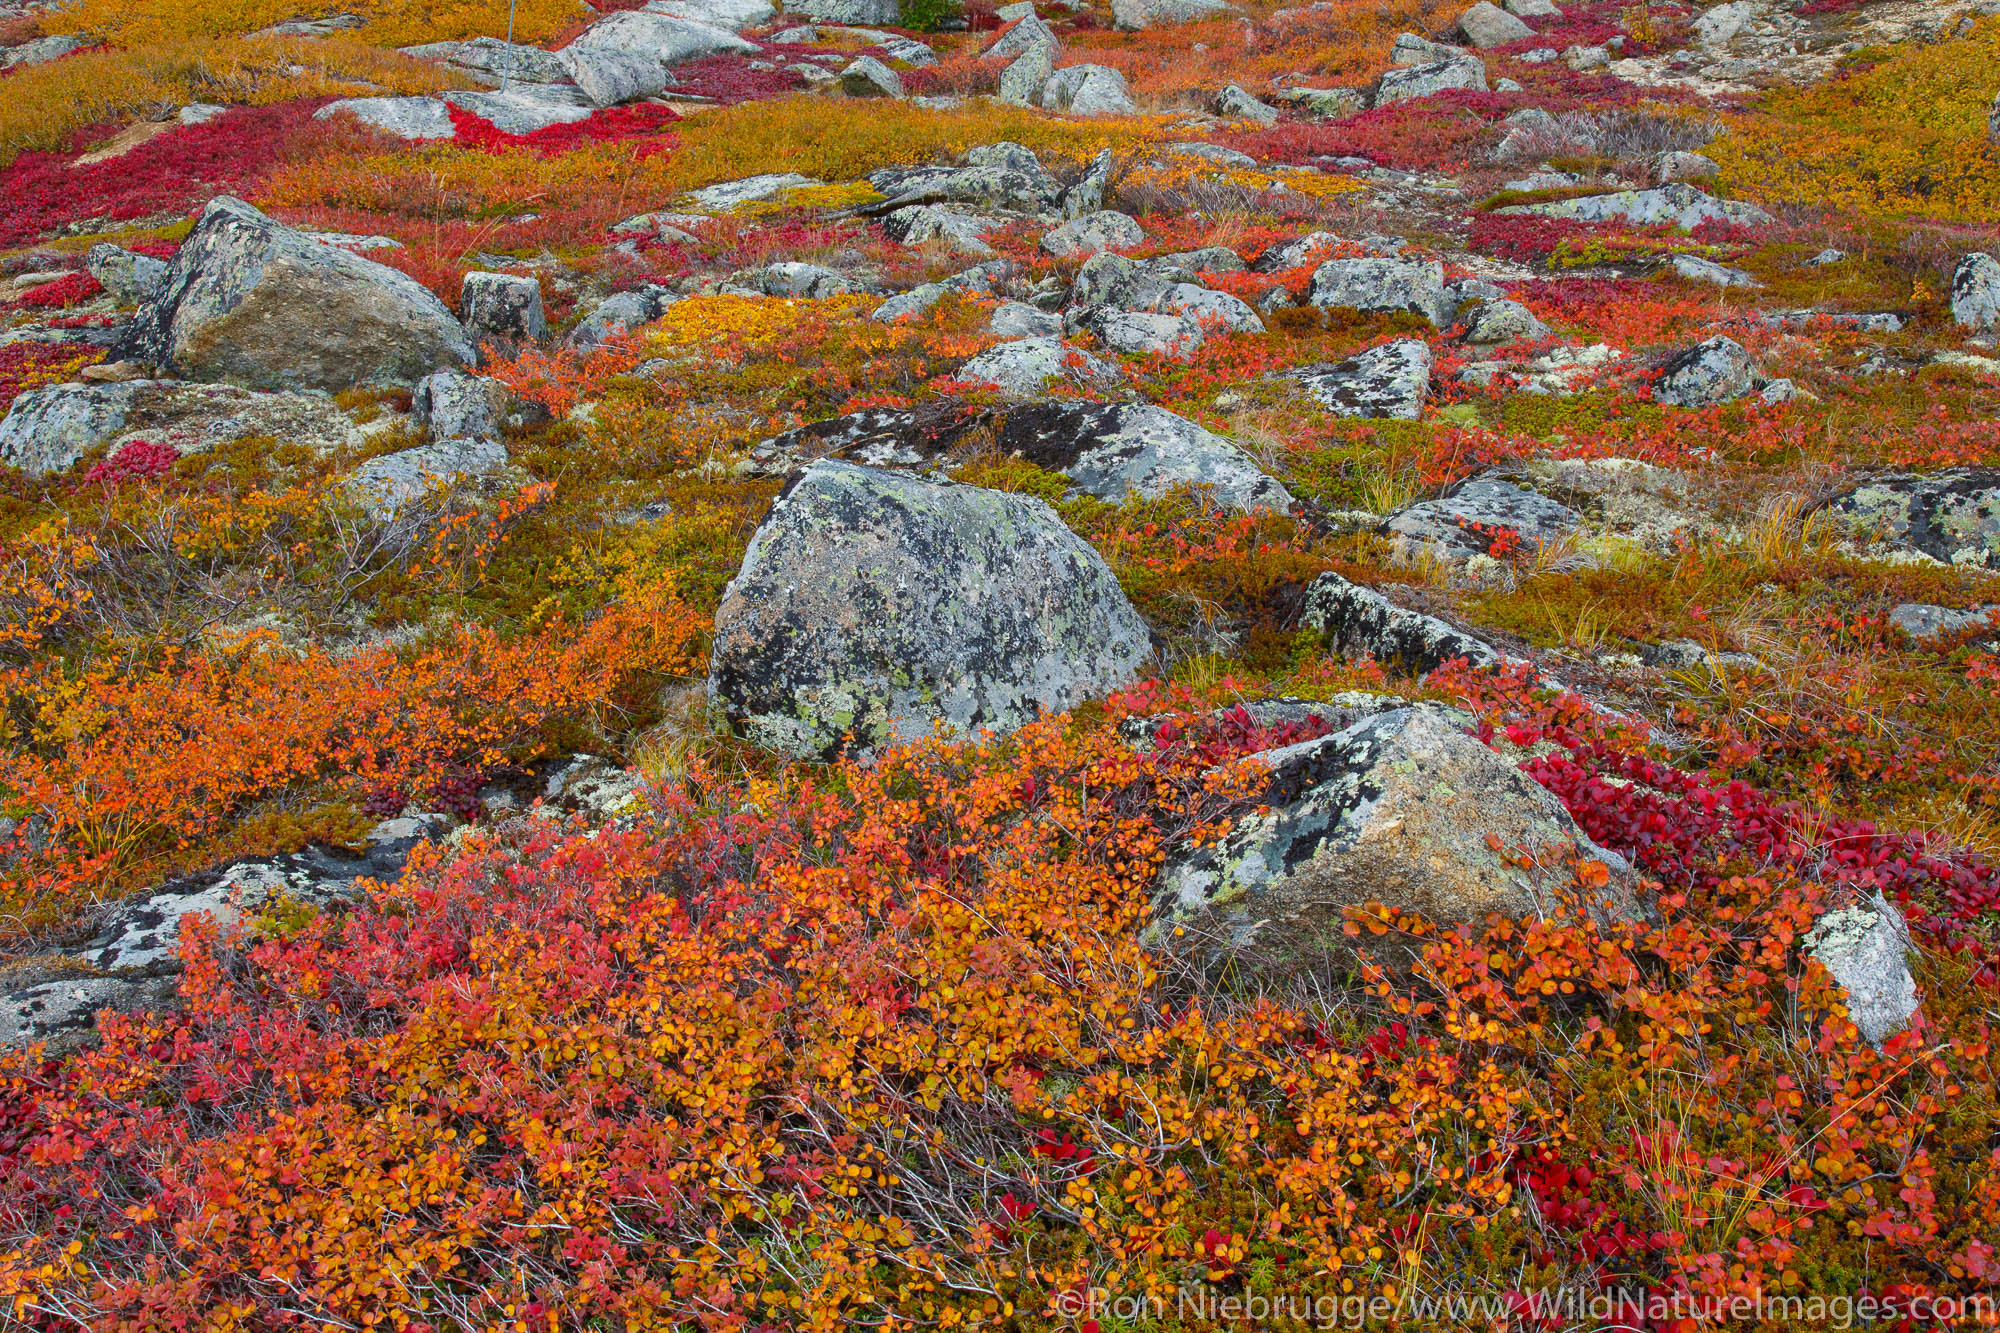 Autumn colors along the Dalton Highway, Alaska.